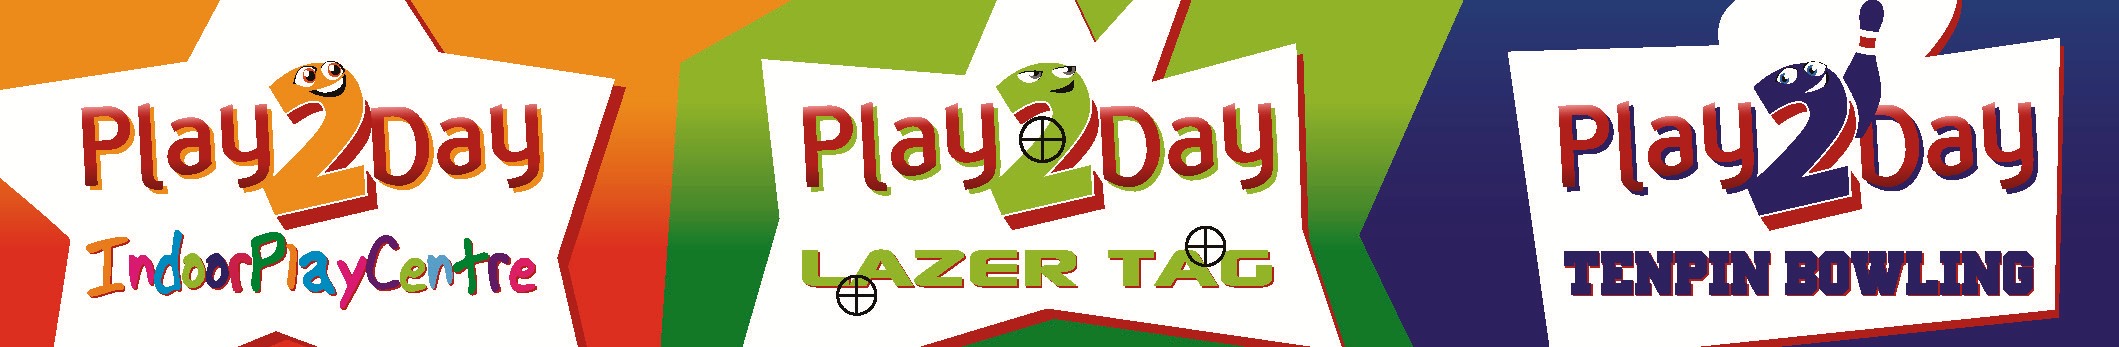 Play2Day_Wisbech_logo